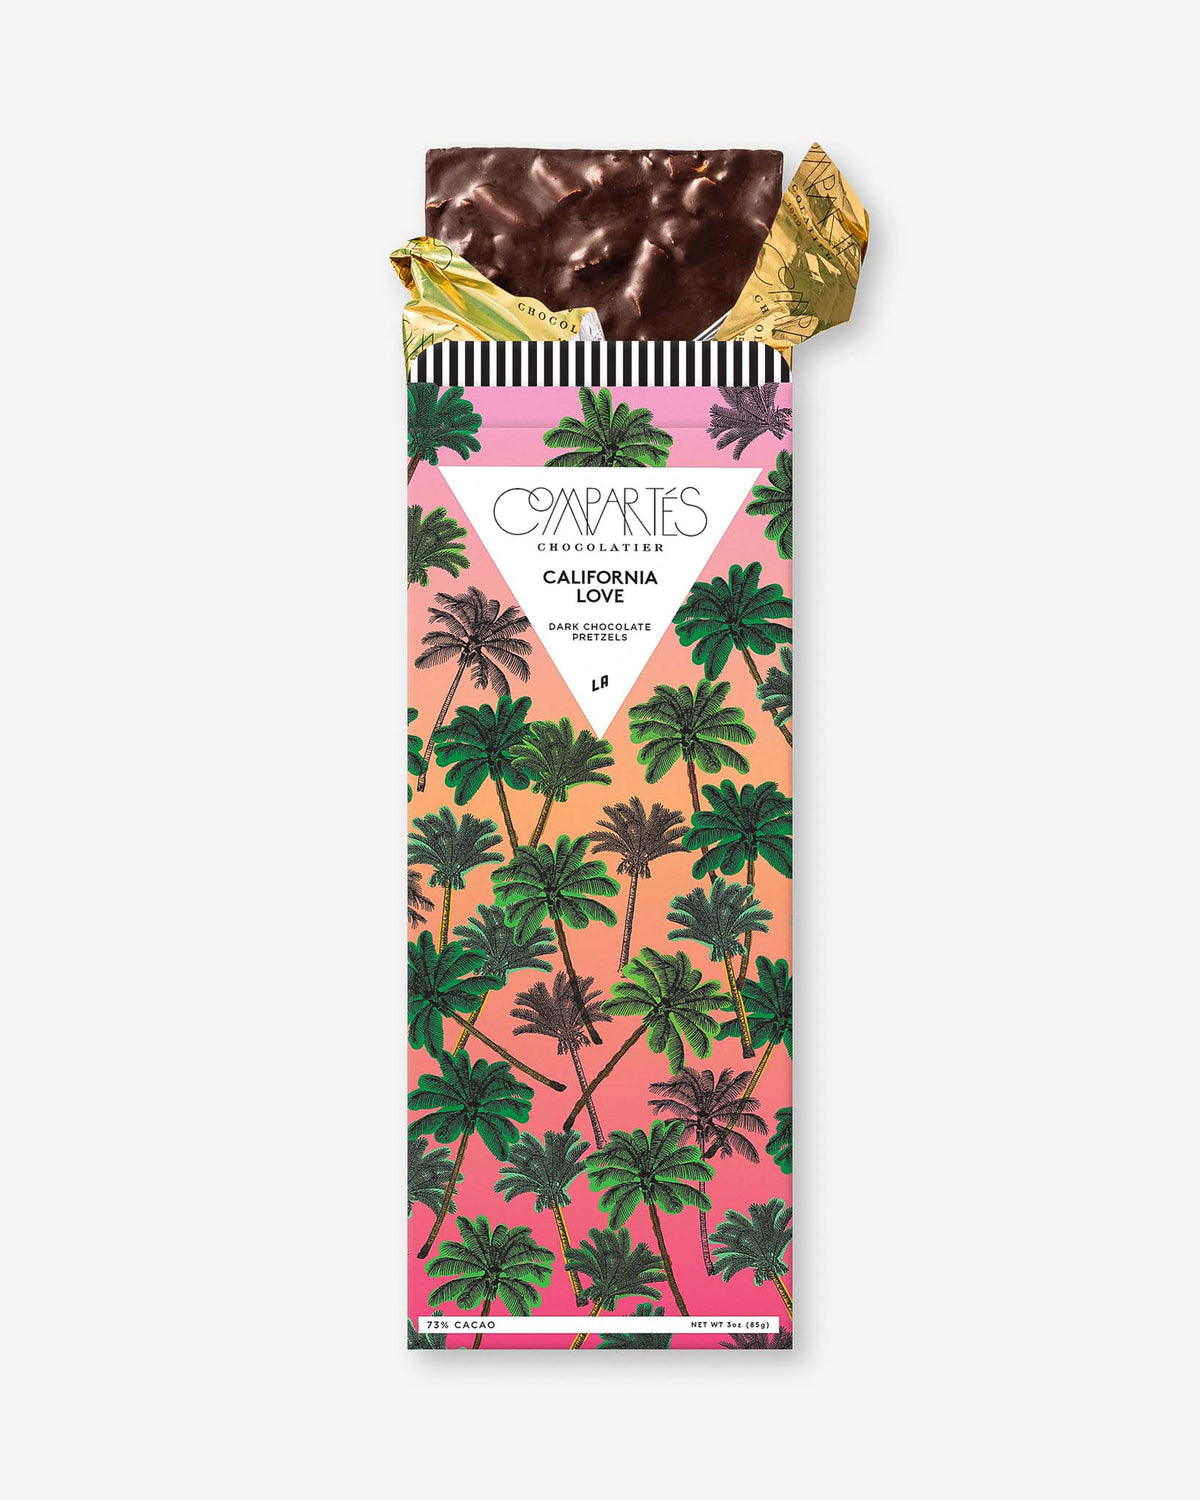 Compartes Gourmet Chocolate Bar - California Love Premium Dark Chocolate Gift